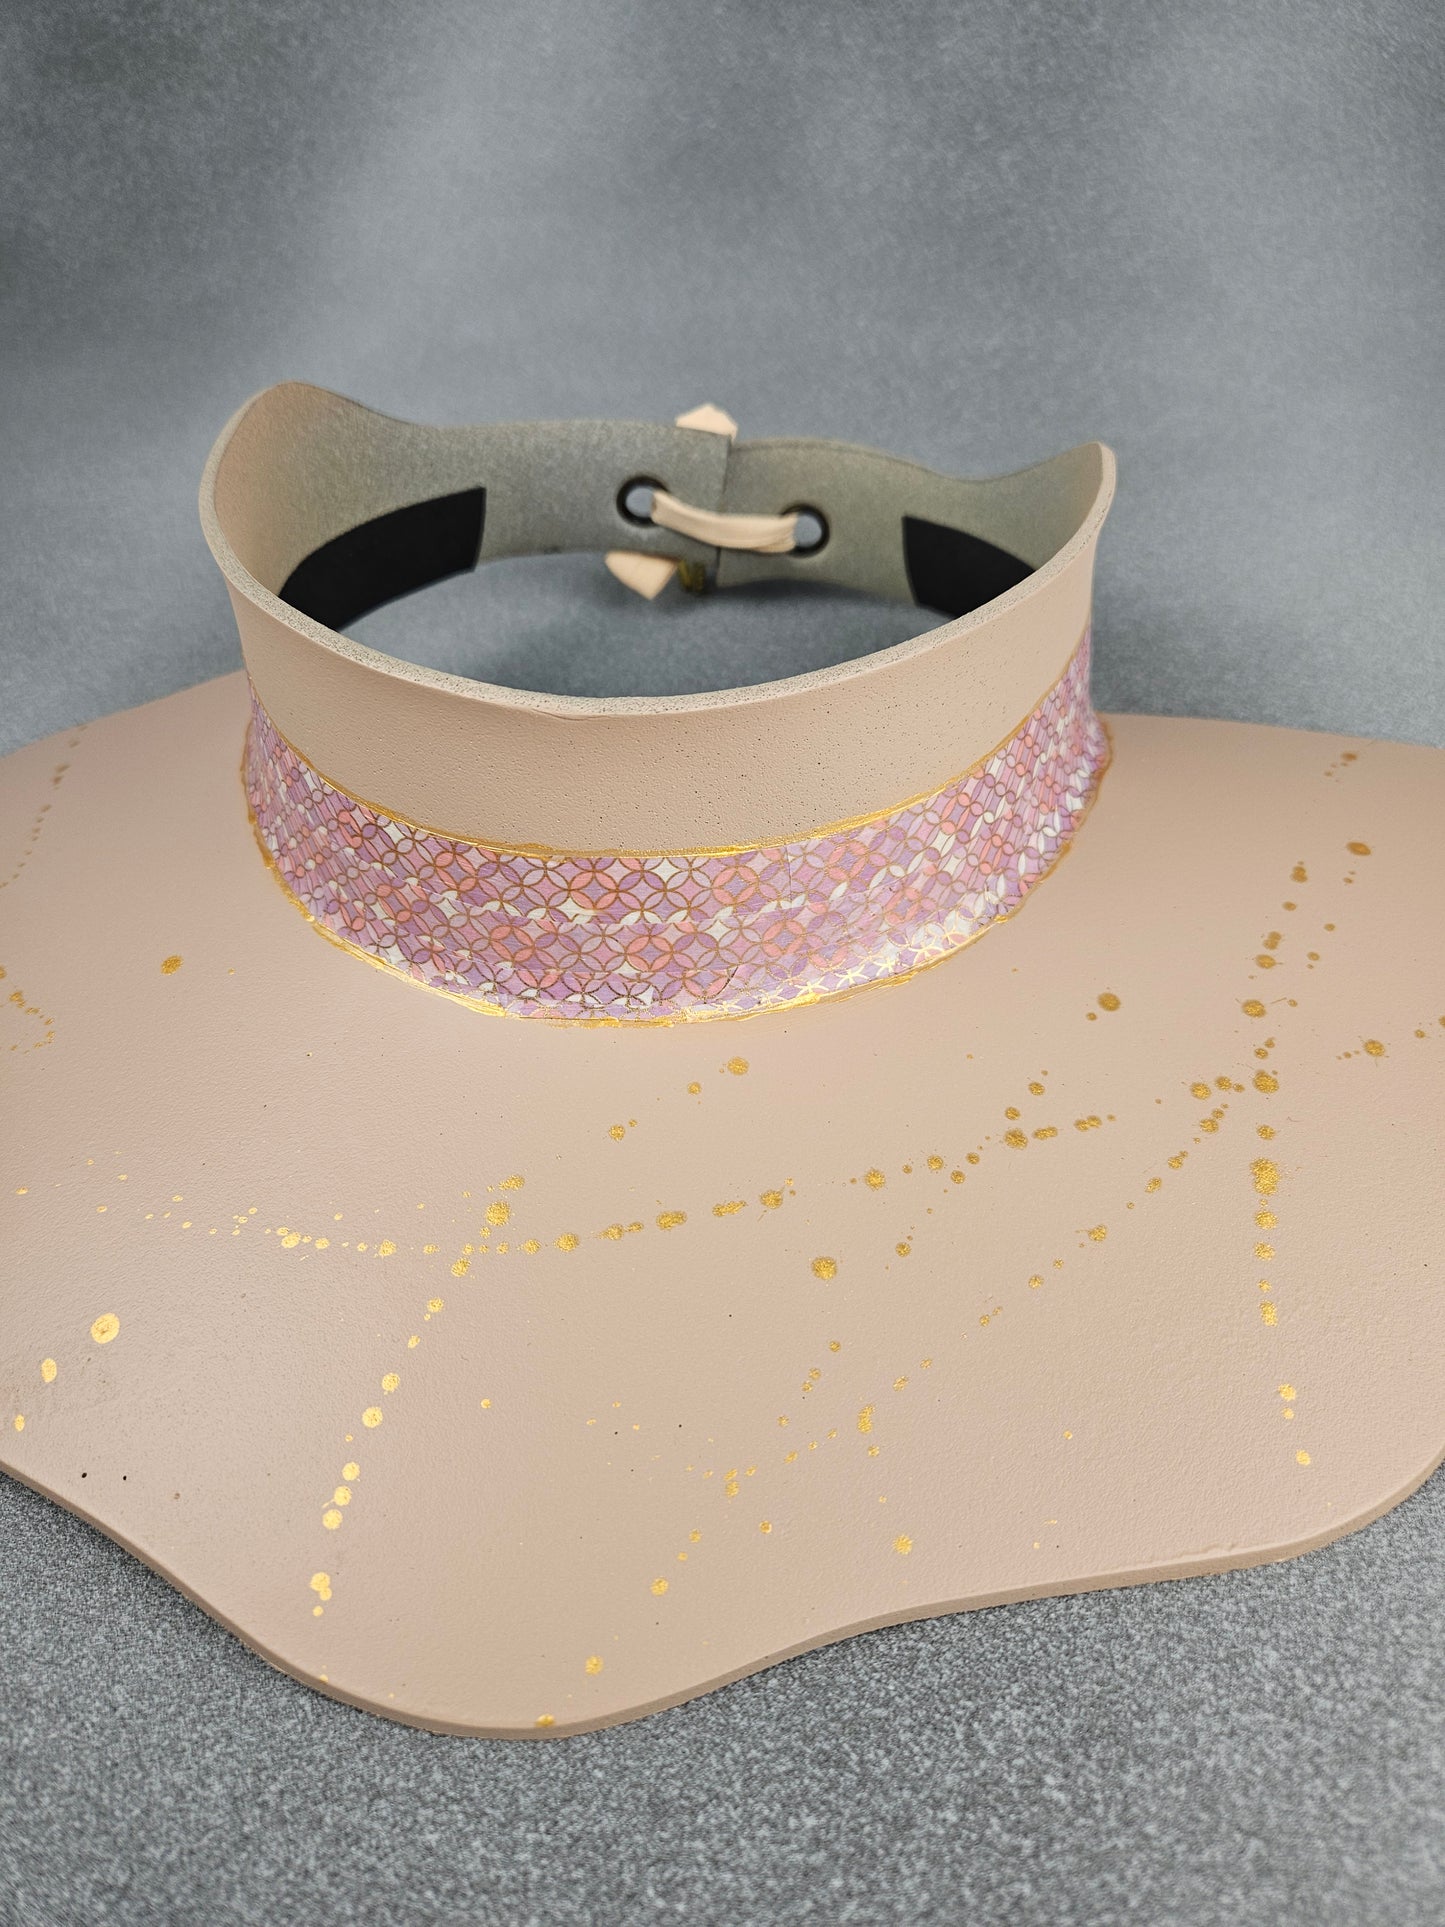 Peachy Beige Lotus Sun Visor Hat with Shimmery Light Pink Geometric Band and Gold Paint Splatter Effect: UV Resistant, Walks, Brunch, Golf, Wedding, Church, No Headache, 1950s, Pool, Beach, Big Brim, Summer